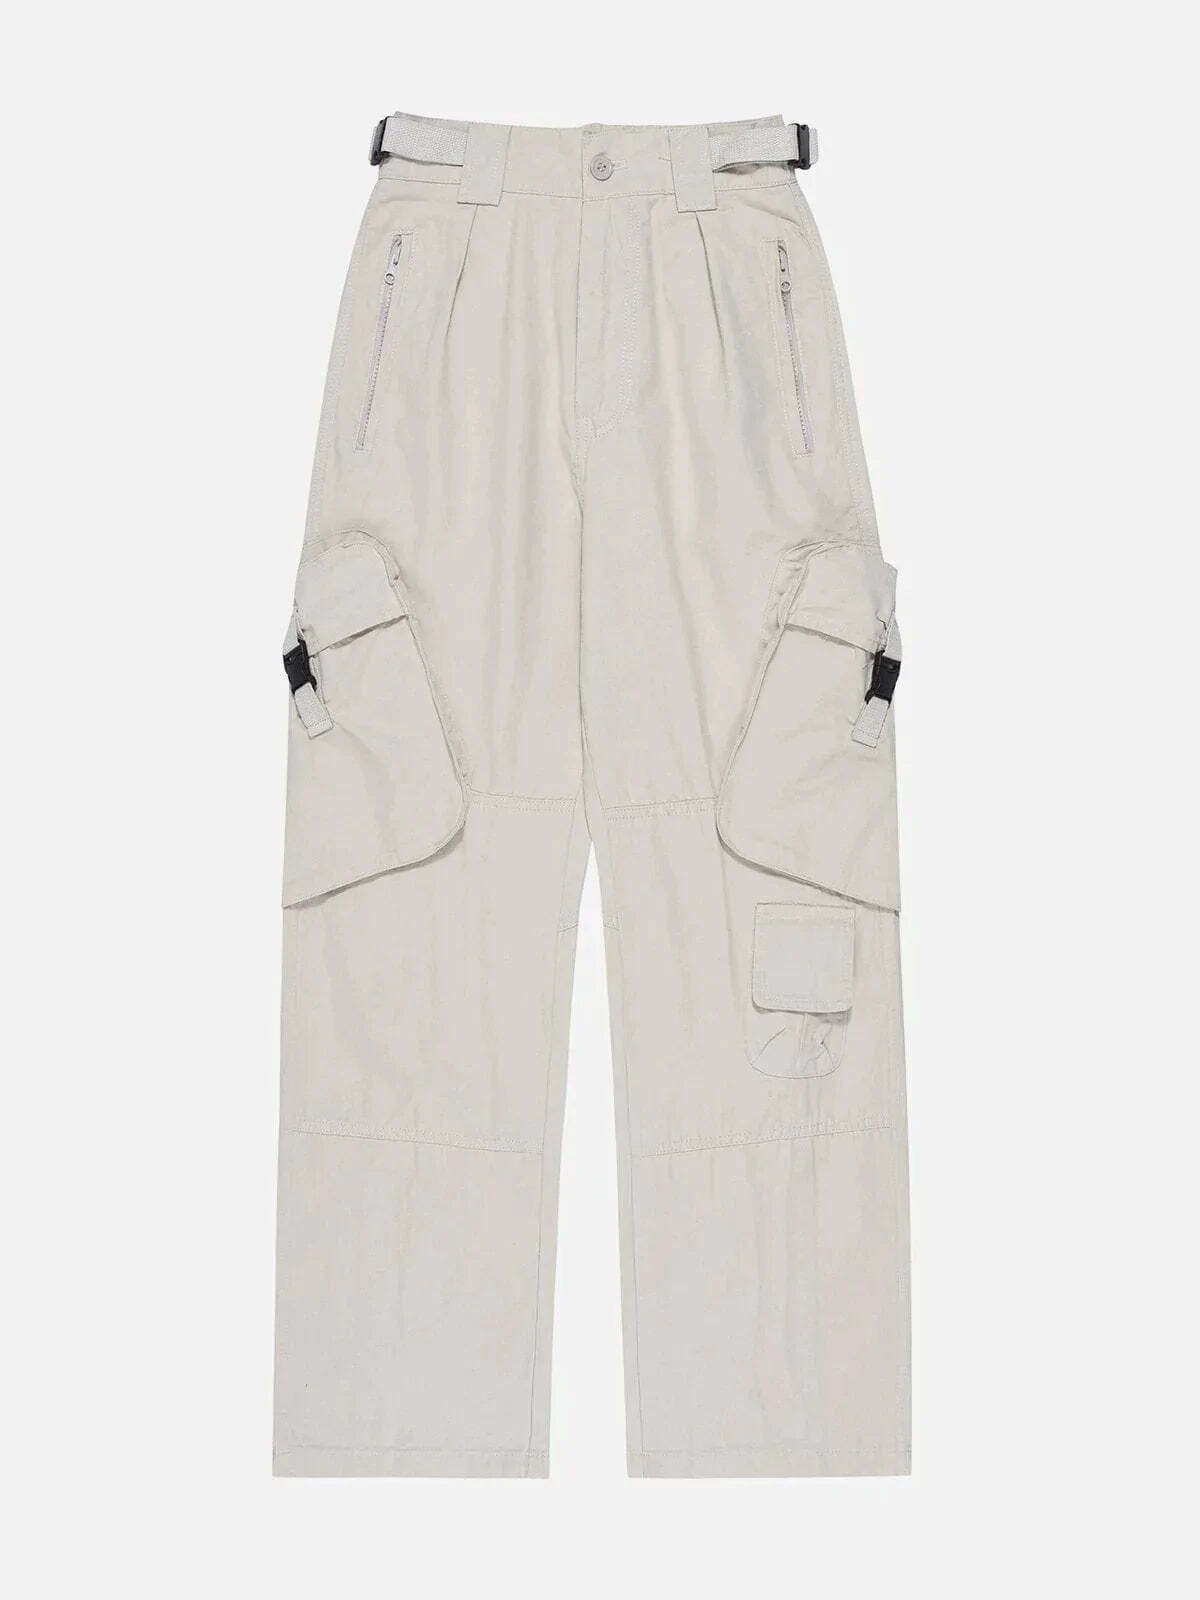 functional zipper pocket pants urban style 5065